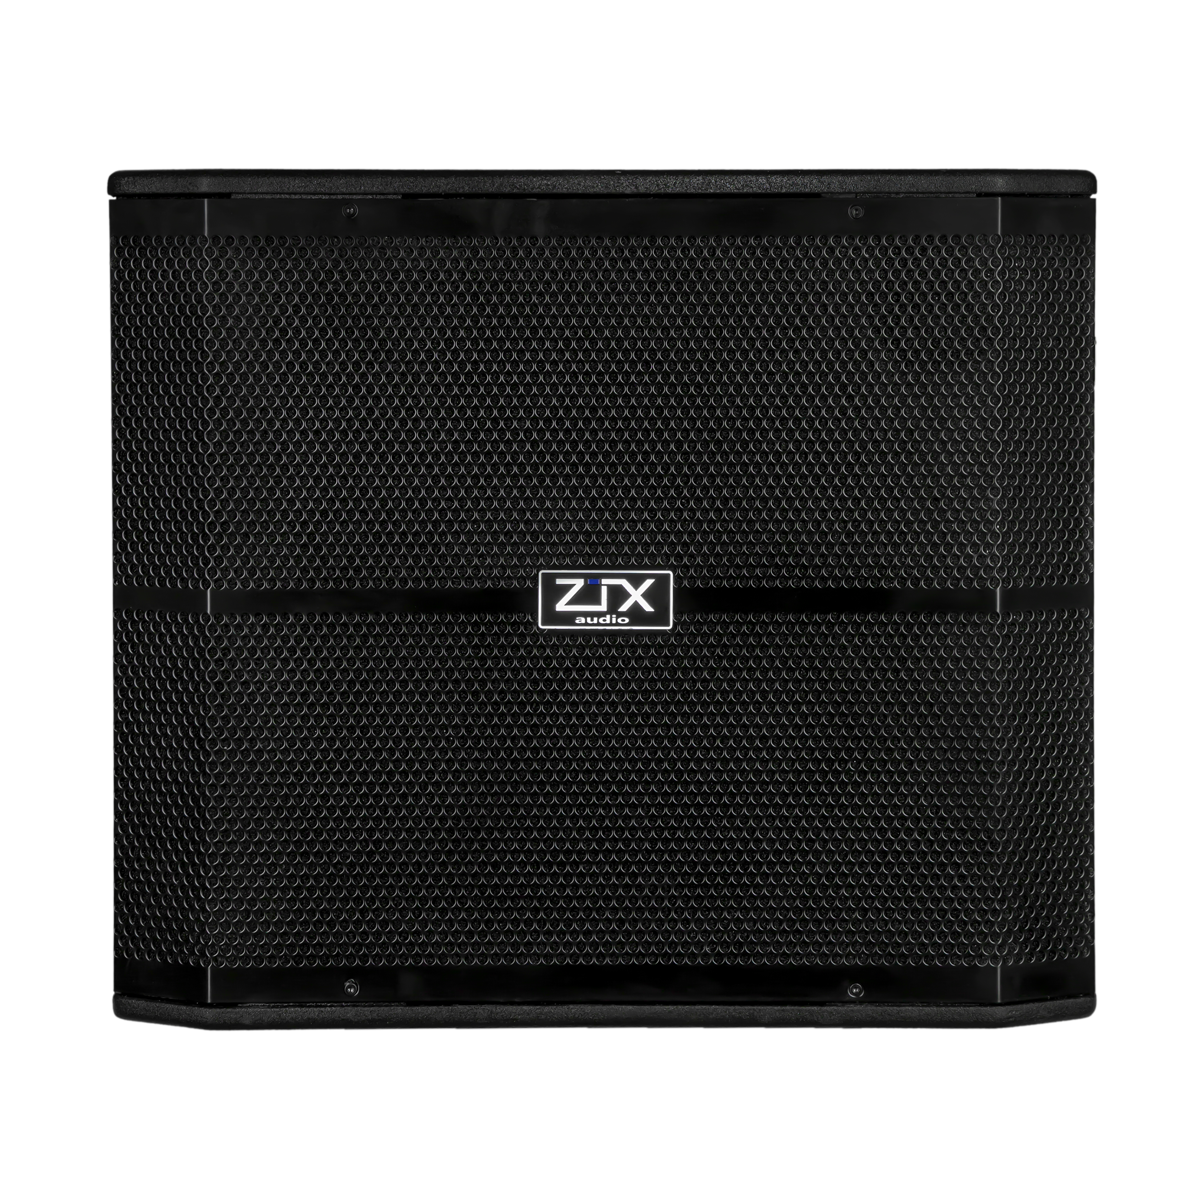 ZTX audio VR918A